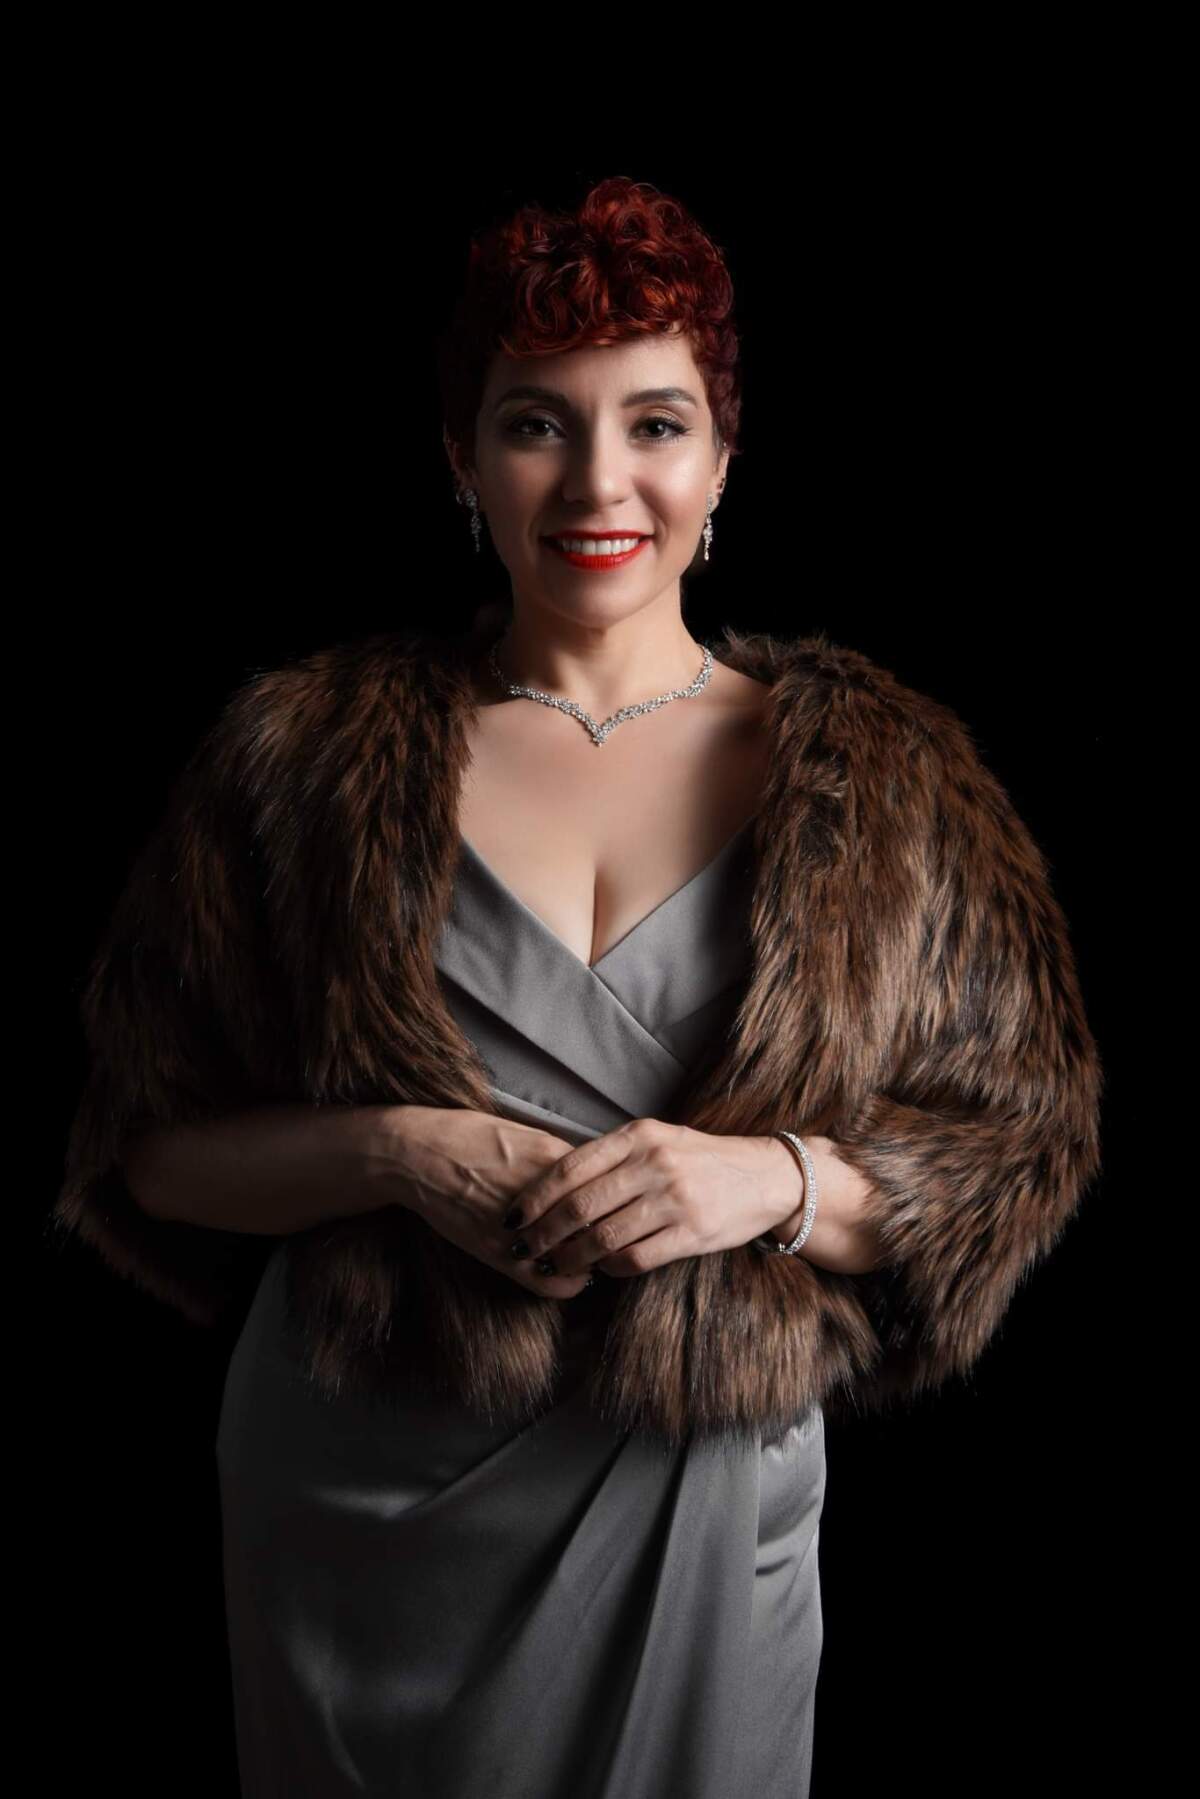 Norma Navarrete will perform as part of the La Jolla Community Center's “Opera Wednesday” on November 9.